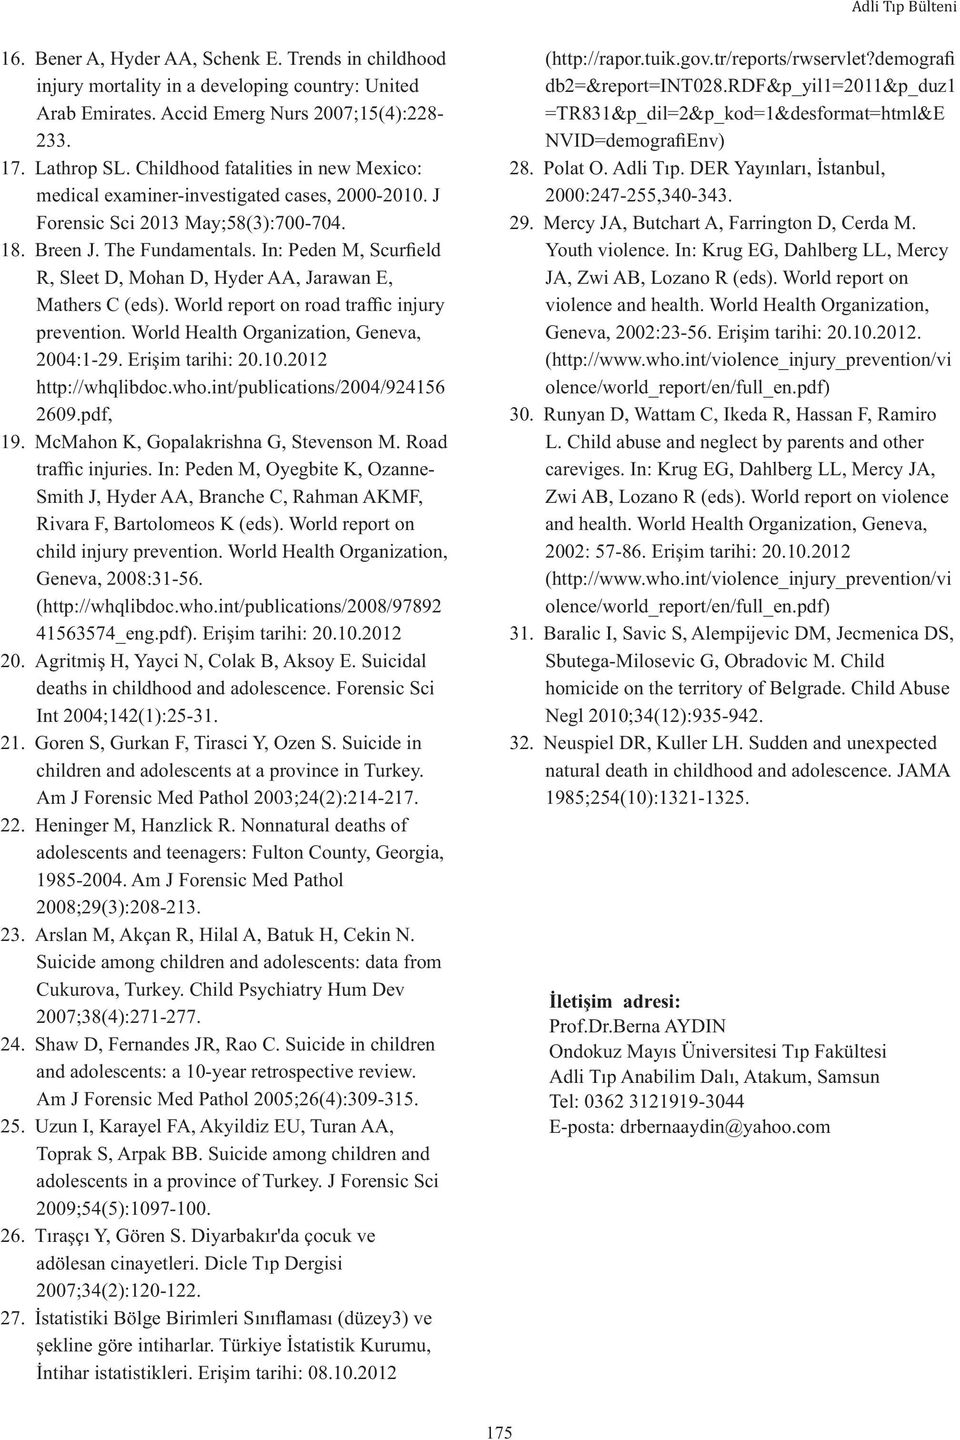 In: Peden M, Scurfield R, Sleet D, Mohan D, Hyder AA, Jarawan E, Mathers C (eds). World report on road traffic injury prevention. World Health Organization, Geneva, 2004:1-29. Erişim tarihi: 20.10.